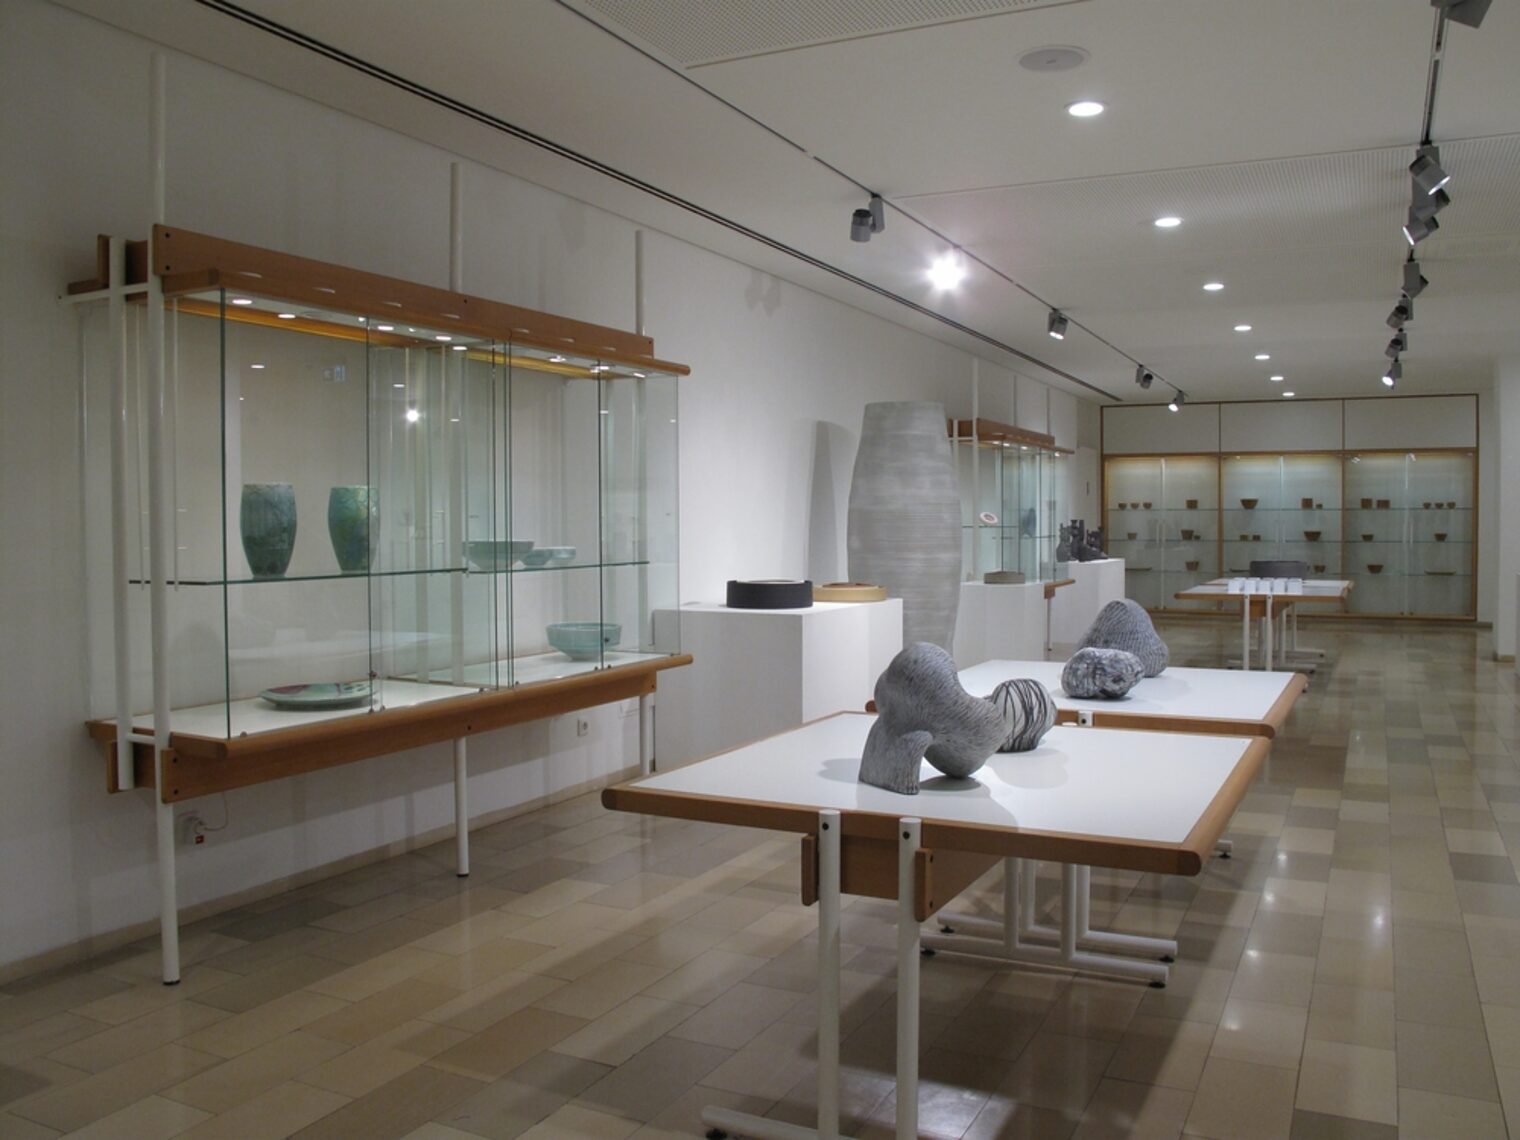 Galerie Handwerk, Keramikzentrum 5